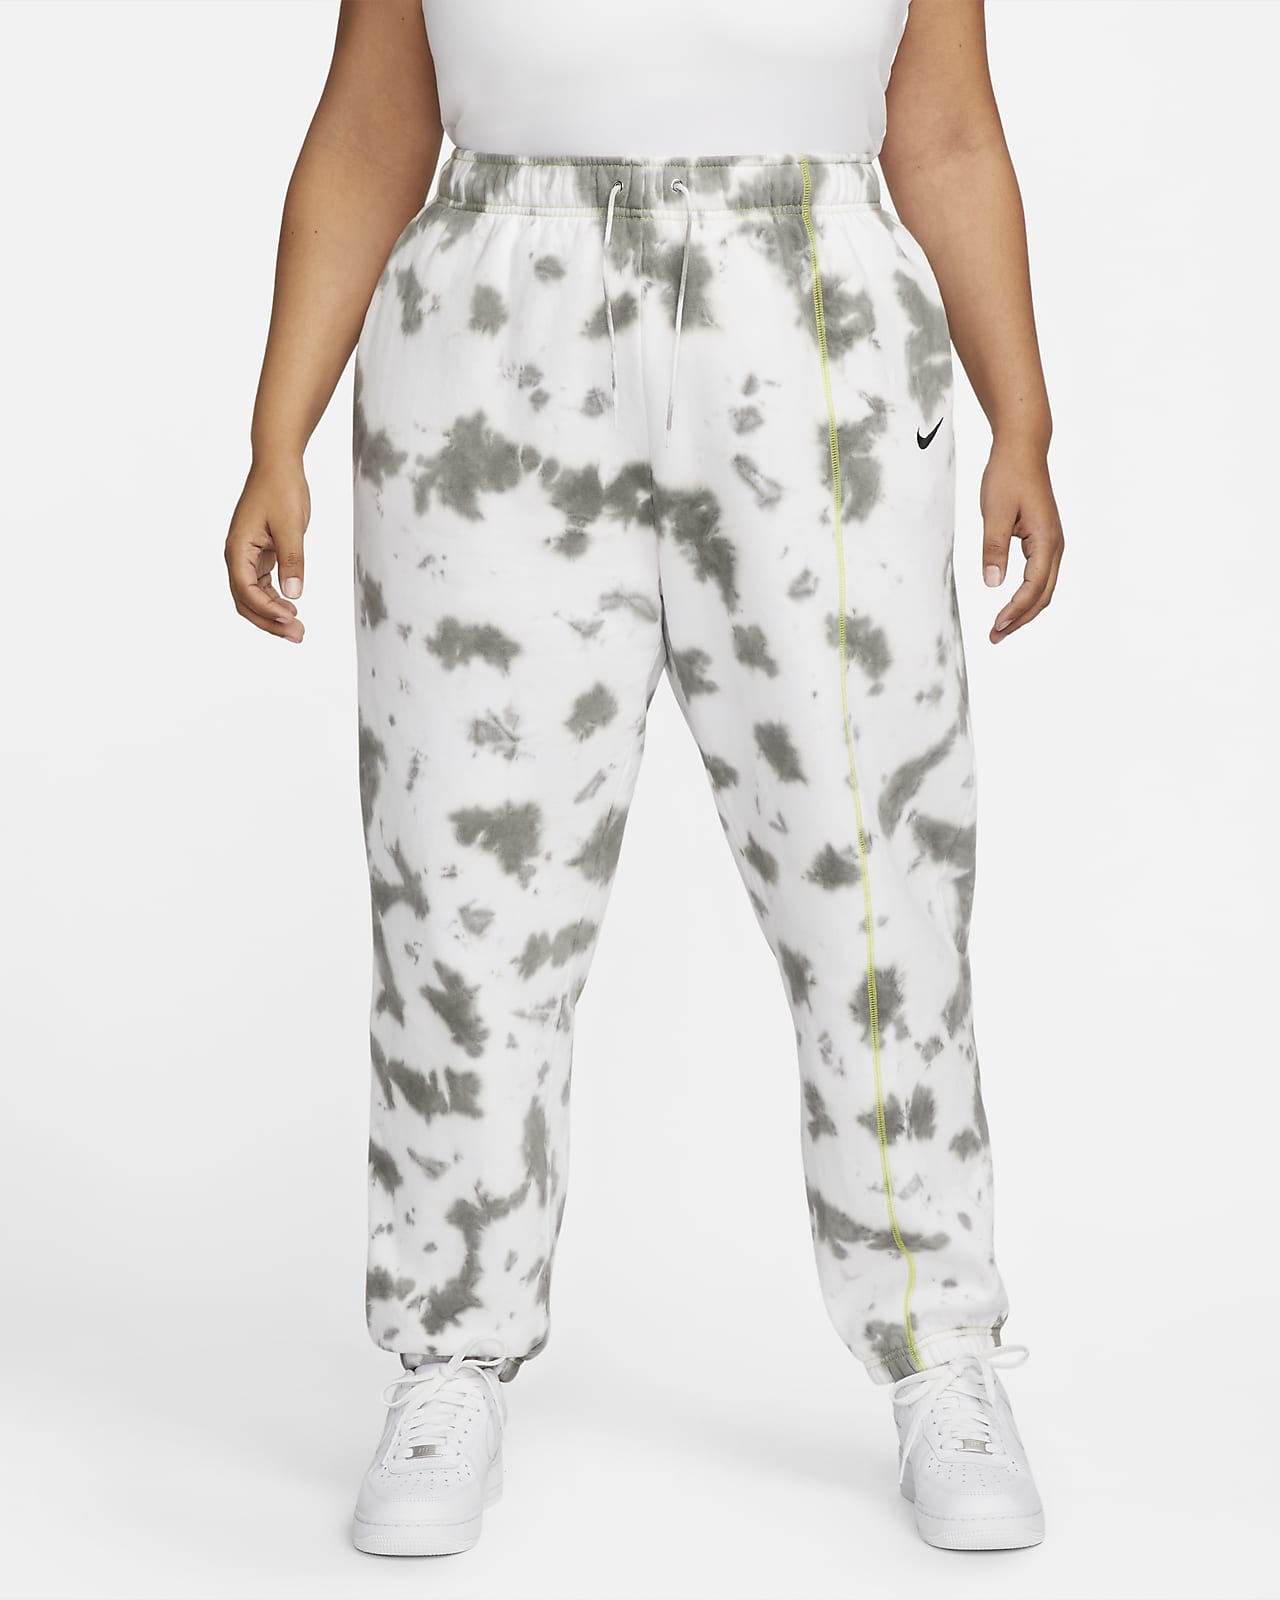 Nike Sportswear-tie-dye-bukser fleece til kvinder (plus size). DK